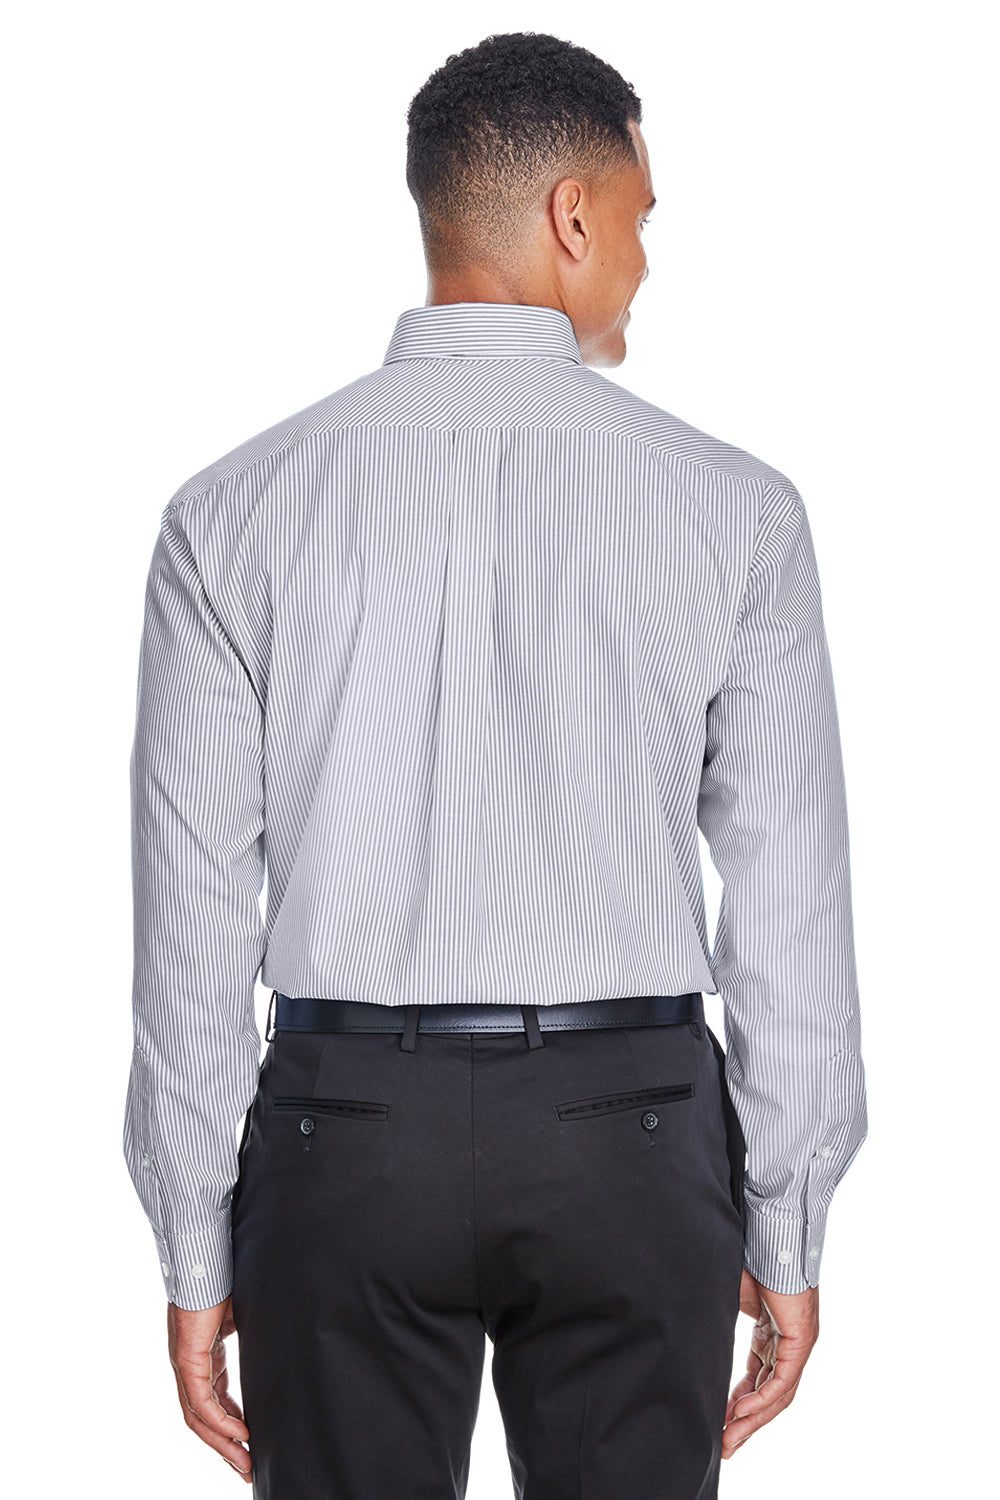 Devon & Jones D645 Mens Crown Woven Collection Wrinkle Resistant Long Sleeve Button Down Shirt w/ Pocket Navy Blue Back